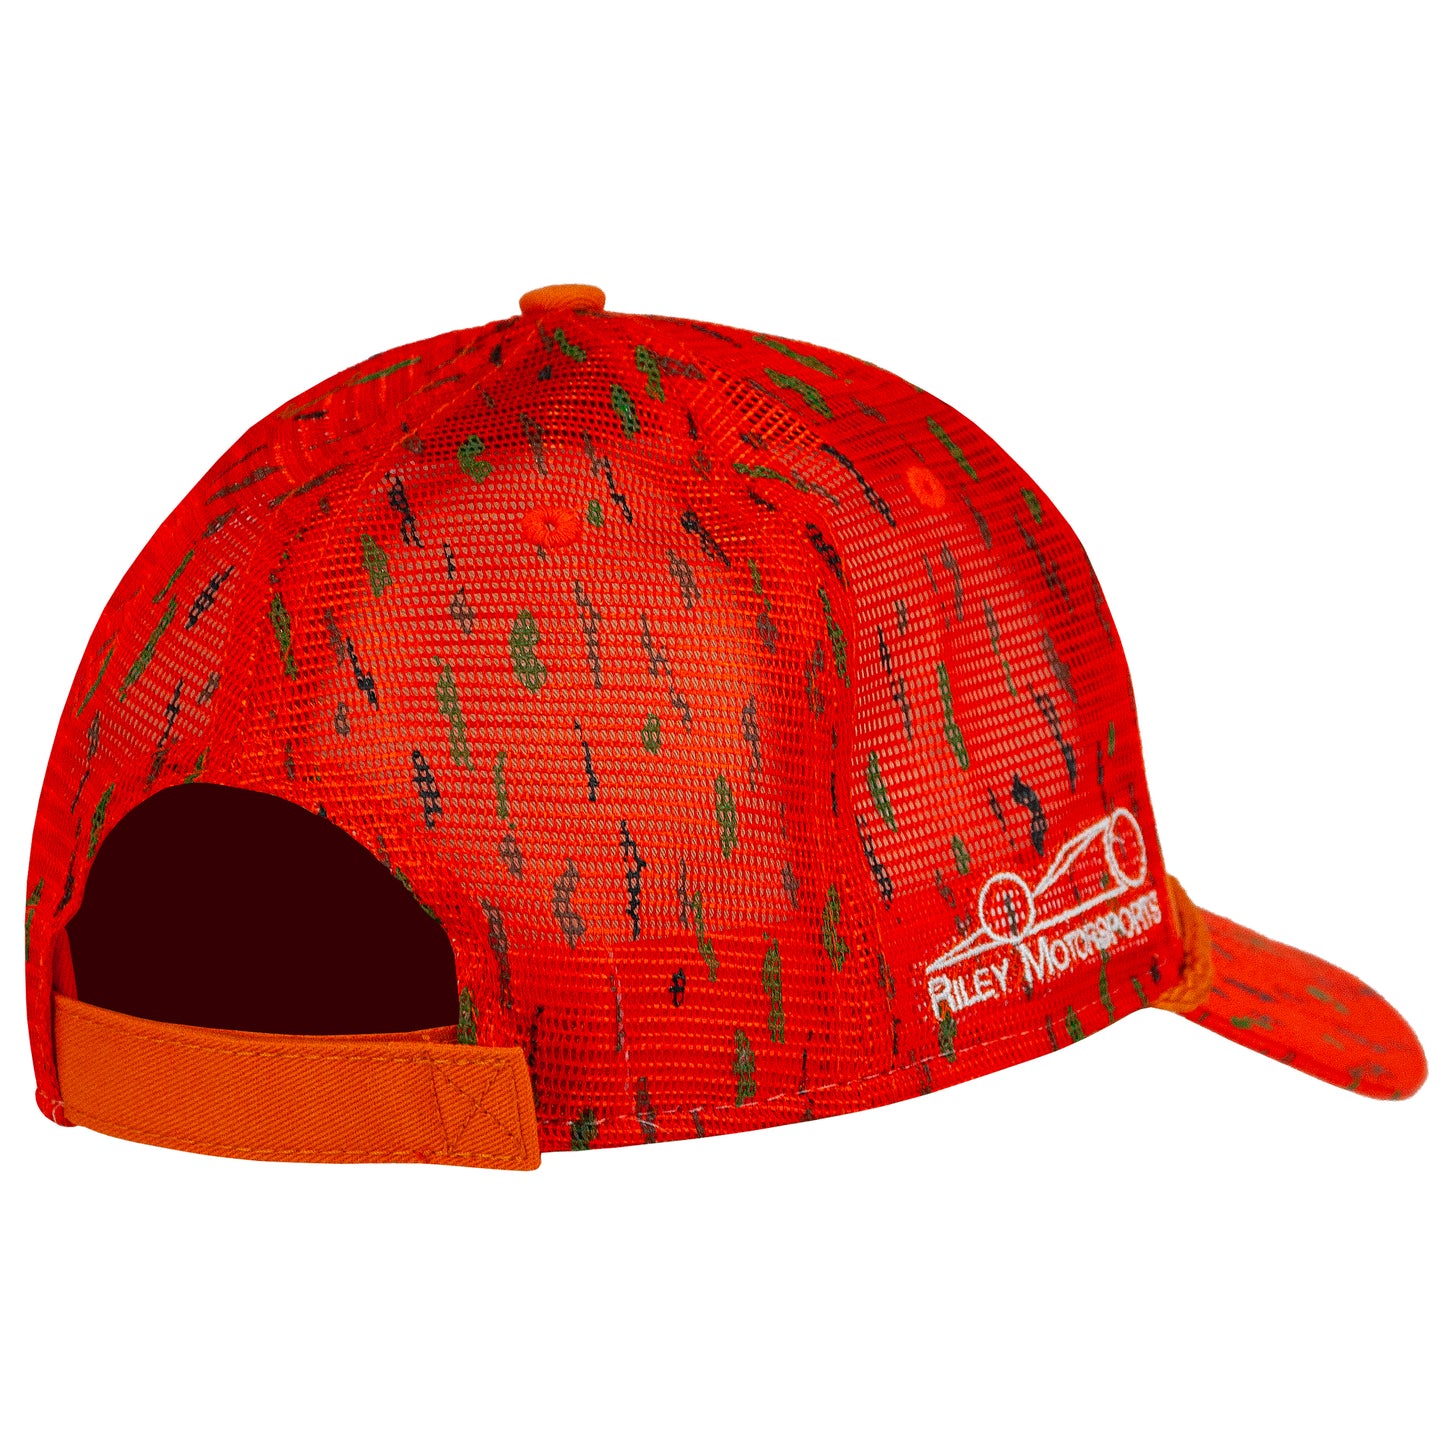 2022 Riley Rope Hat - Orange Camoflauge